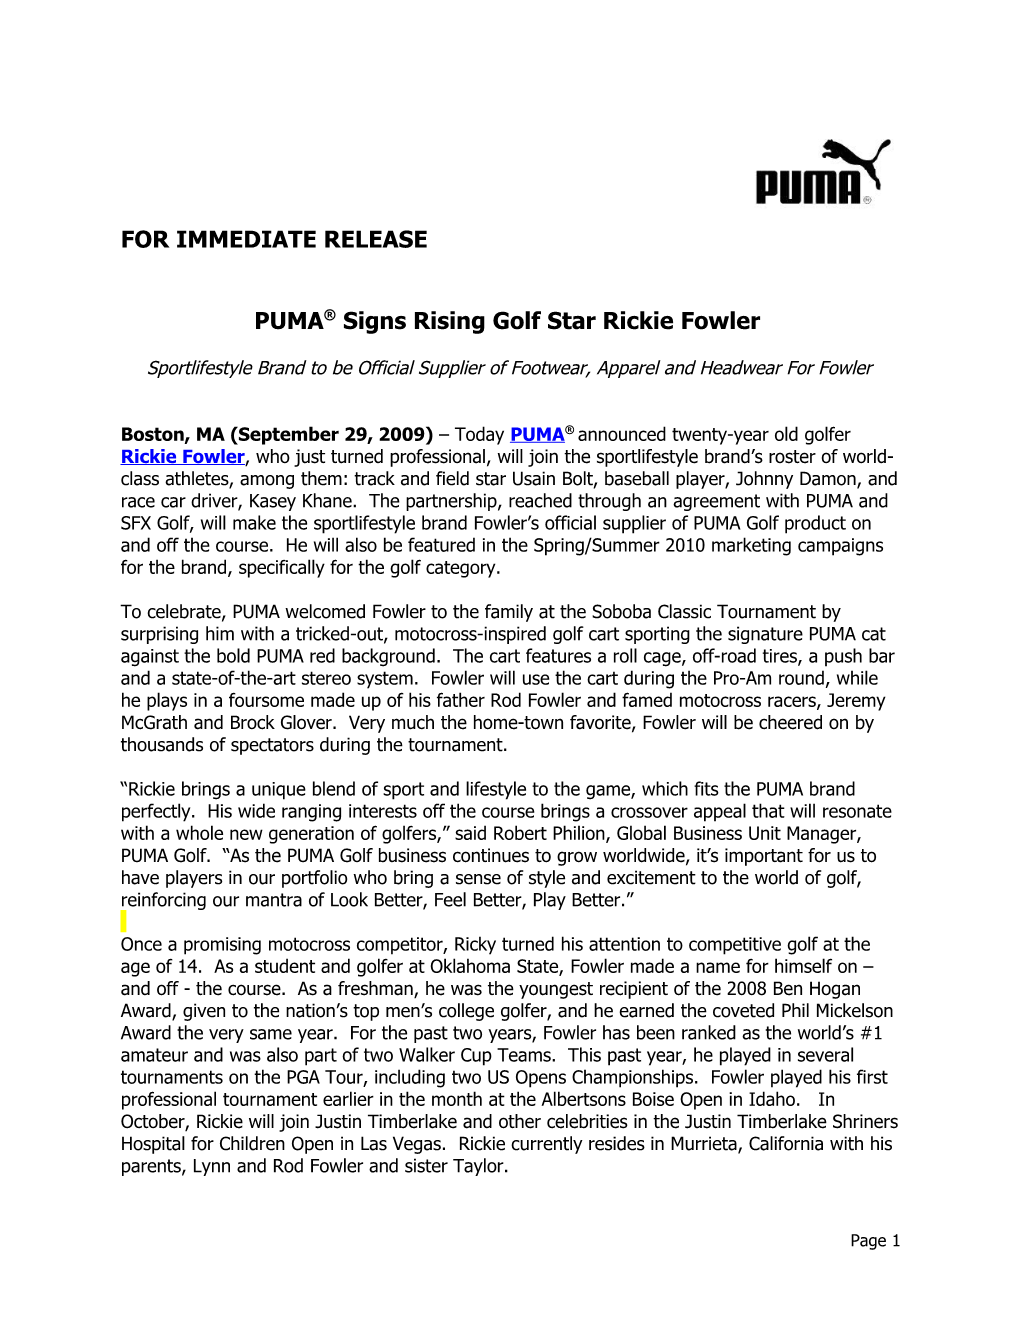 PUMA Signs Rising Golf Star Rickie Fowler